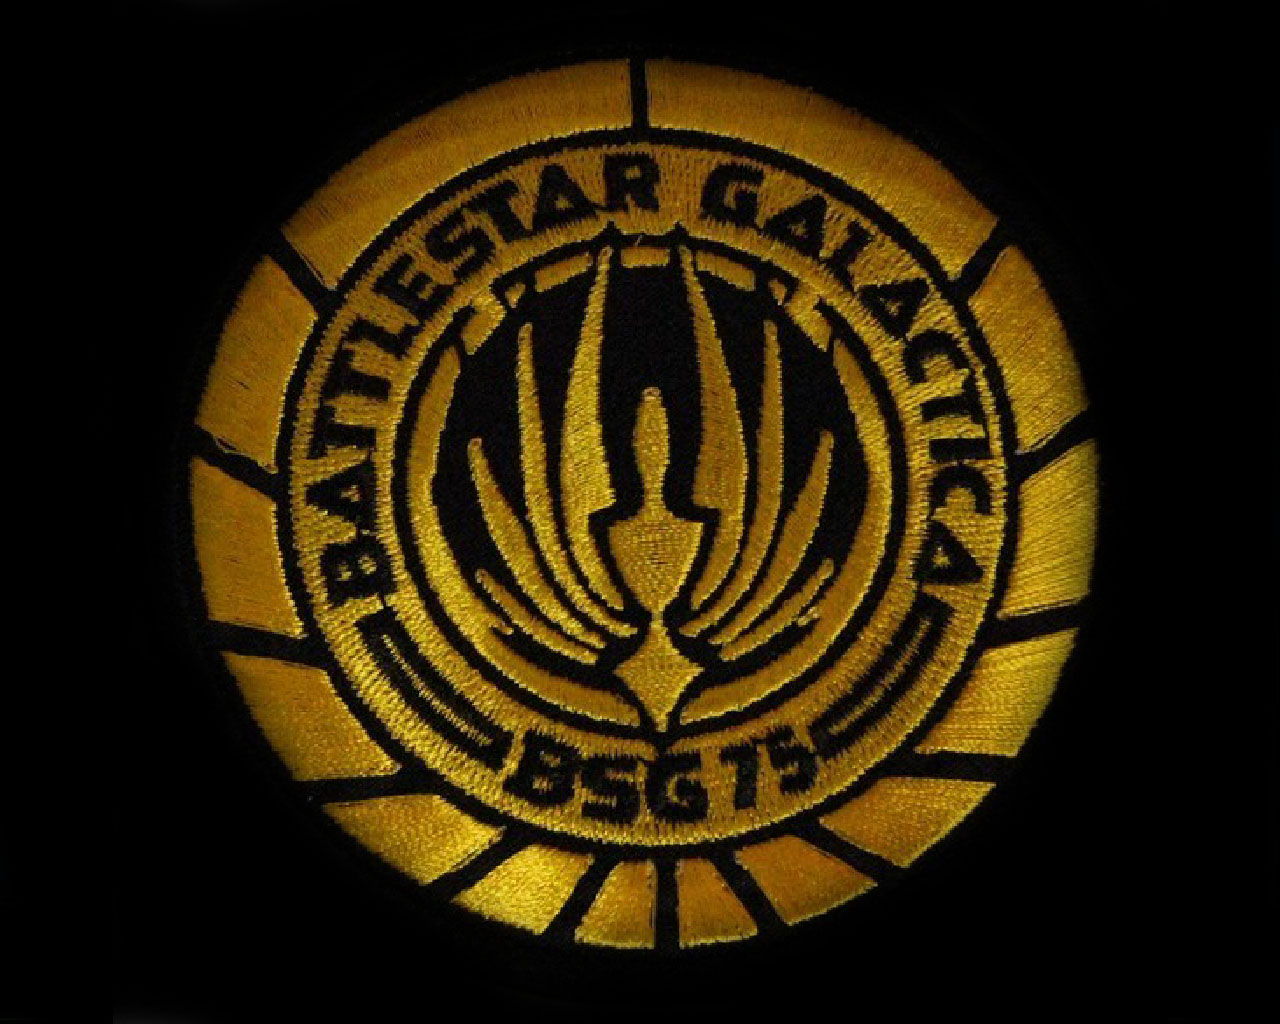 Descargar fondos de escritorio de Battlestar Galáctica (1978) HD